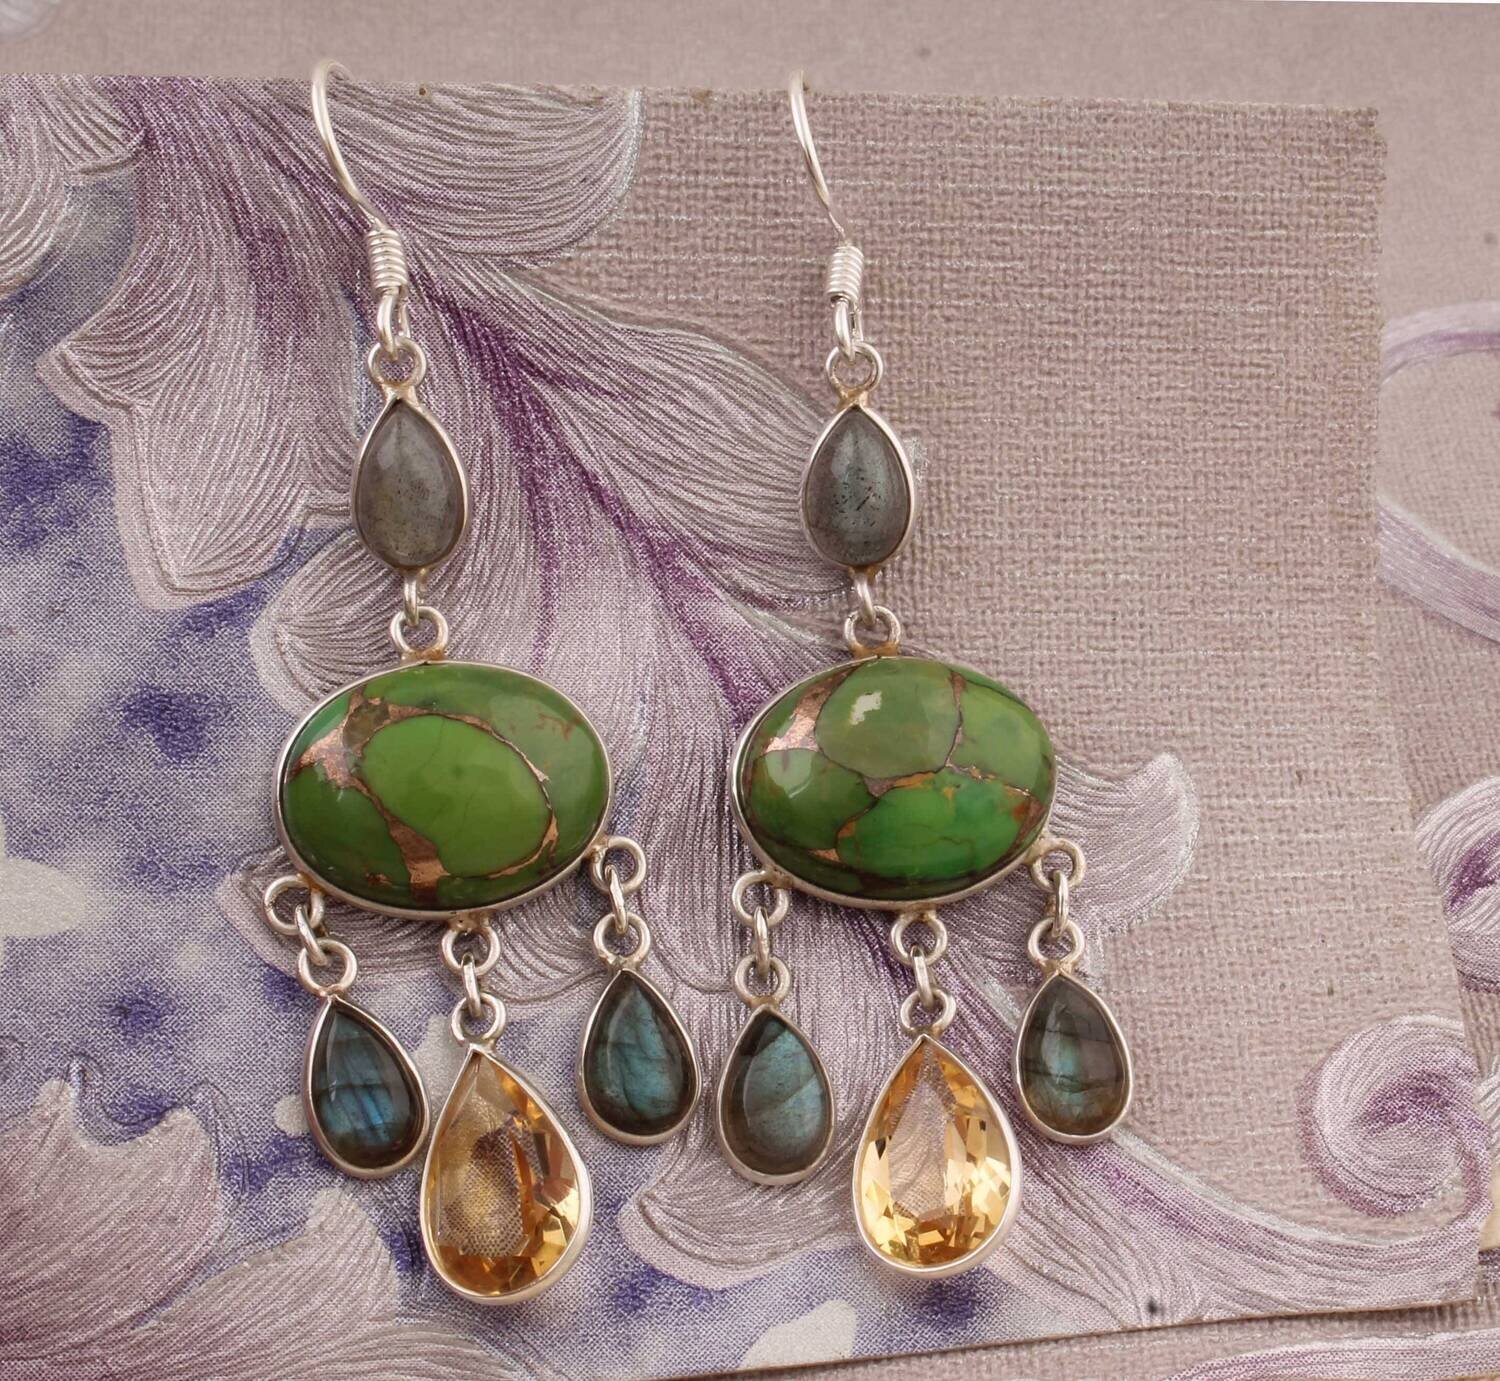 Combo Gemstone Earring Composite Turquoise+Labradorite+Citrine Gemstone Earring 925-Sterling Silver Earring Big Size Earring Gift For Her